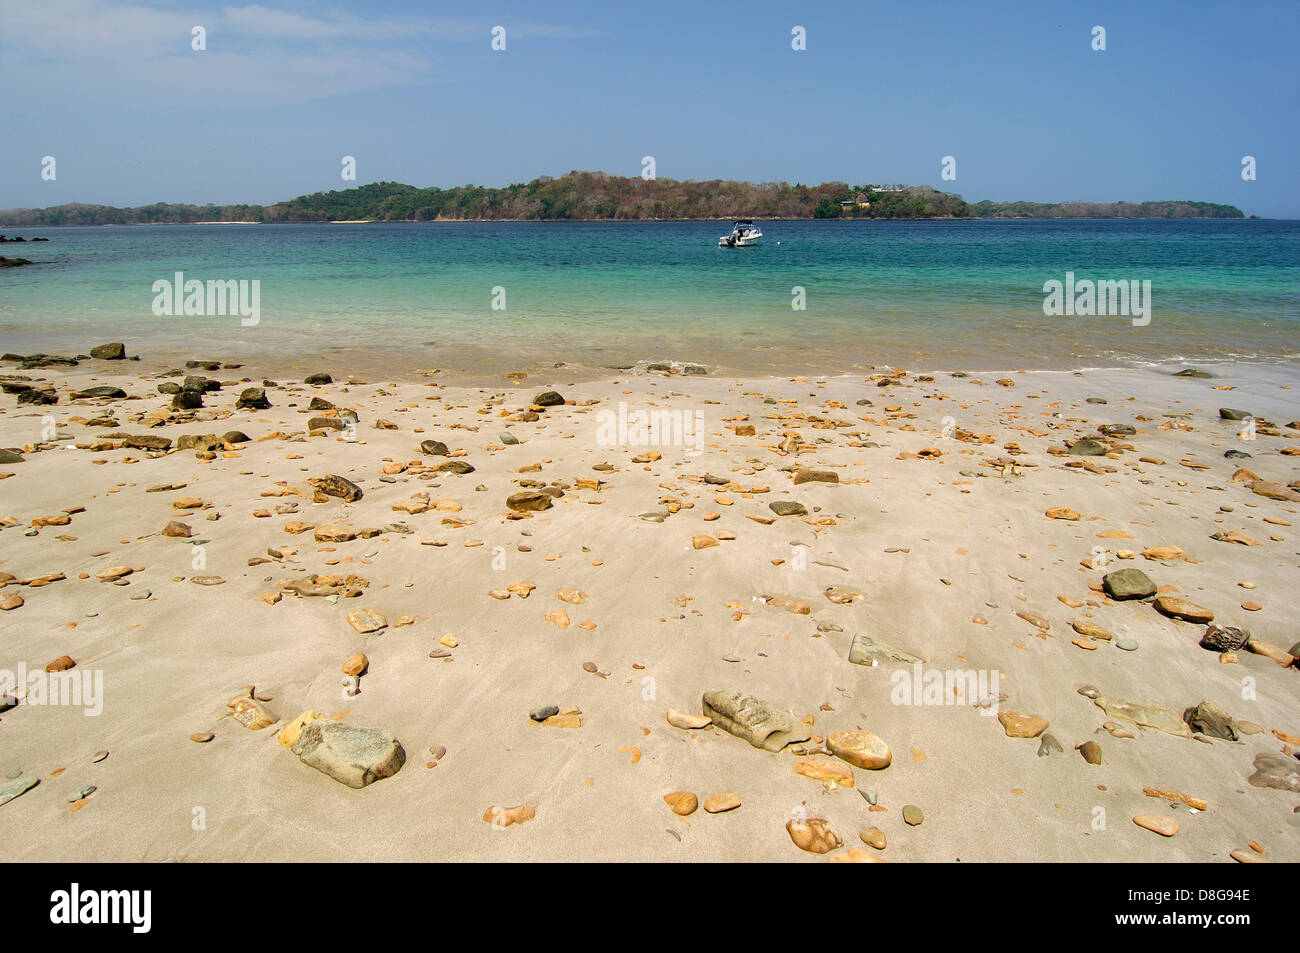 Rocky beach in Contadora island shore. Las Perlas archipelago, Panama province, Central America Stock Photo